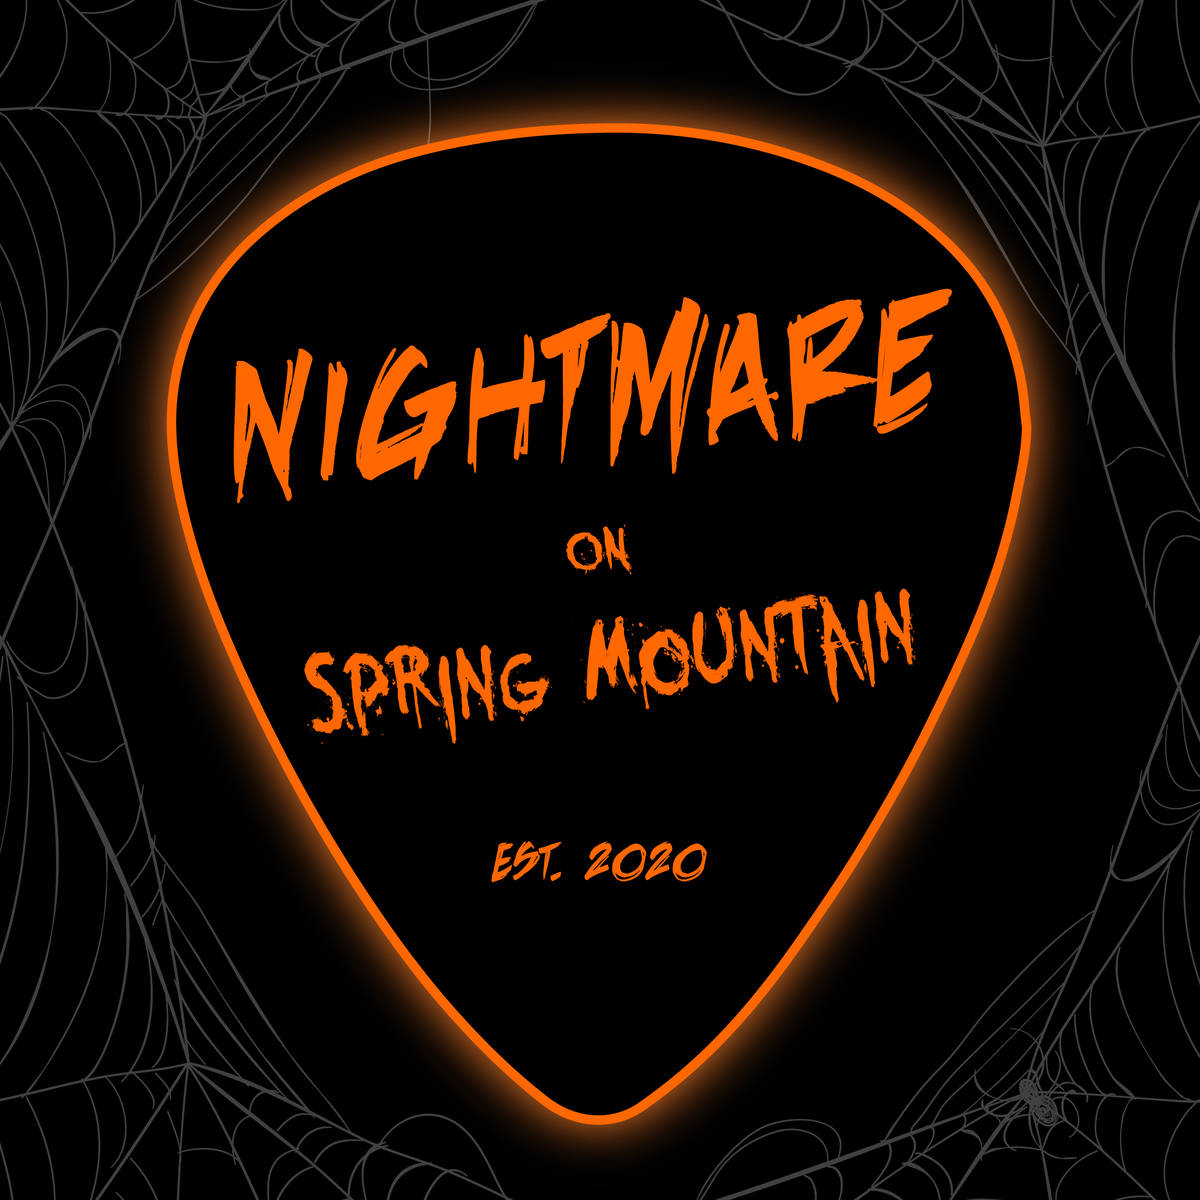 Nightmare on Spring Mountain. (Courtesy)